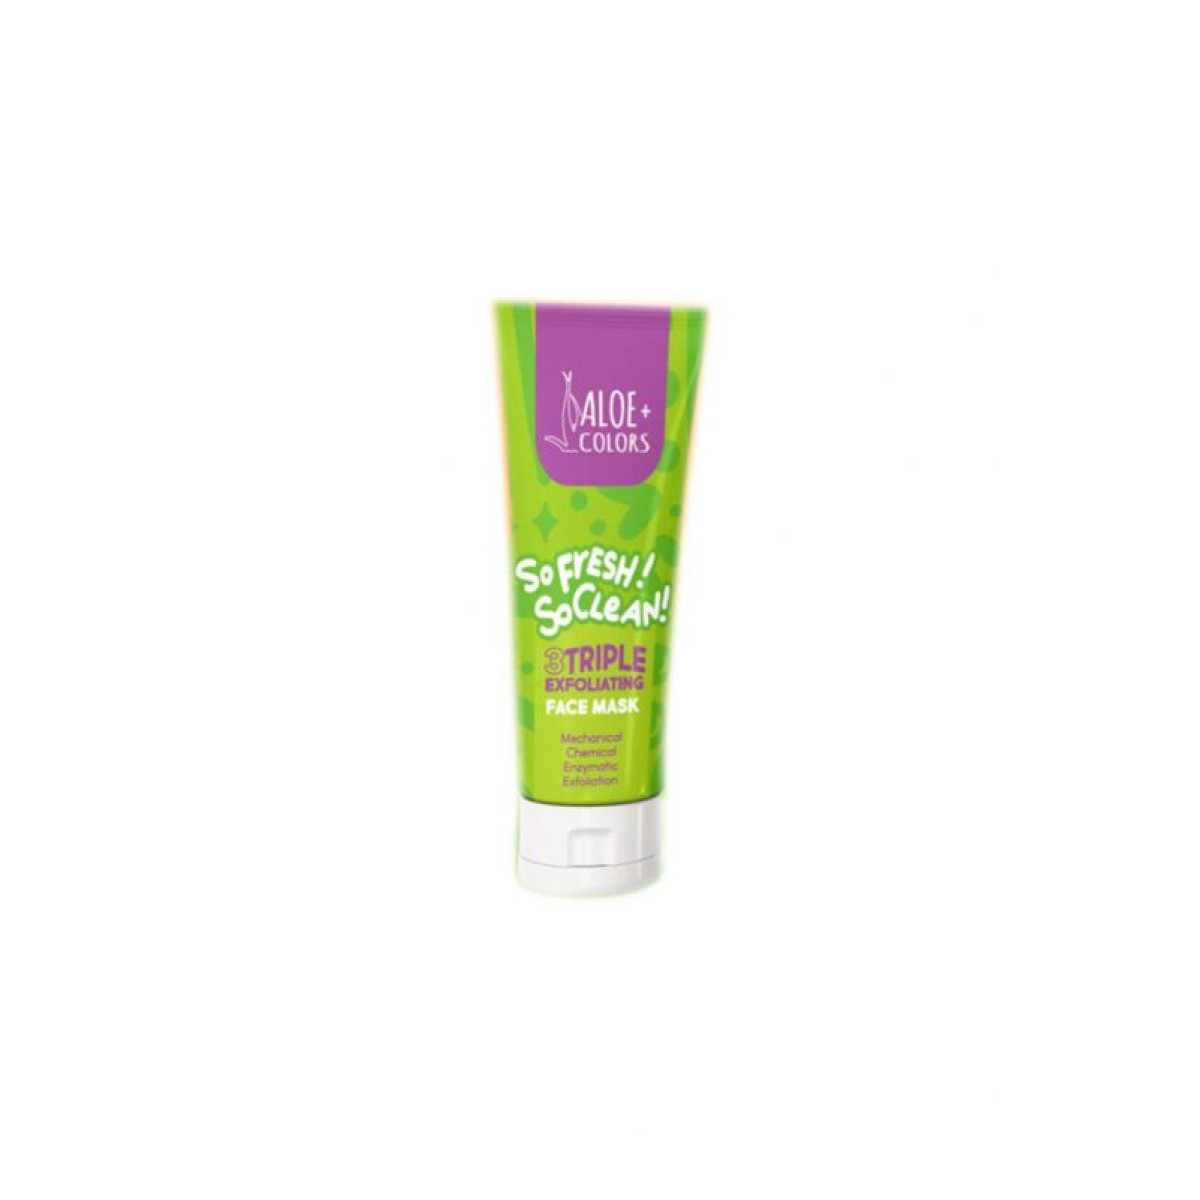 Aloe+ Colors | So Fresh! So Clean! Triple Exfoliating  Mask | Μάσκα Προσώπου για Καθαρισμό | 60ml